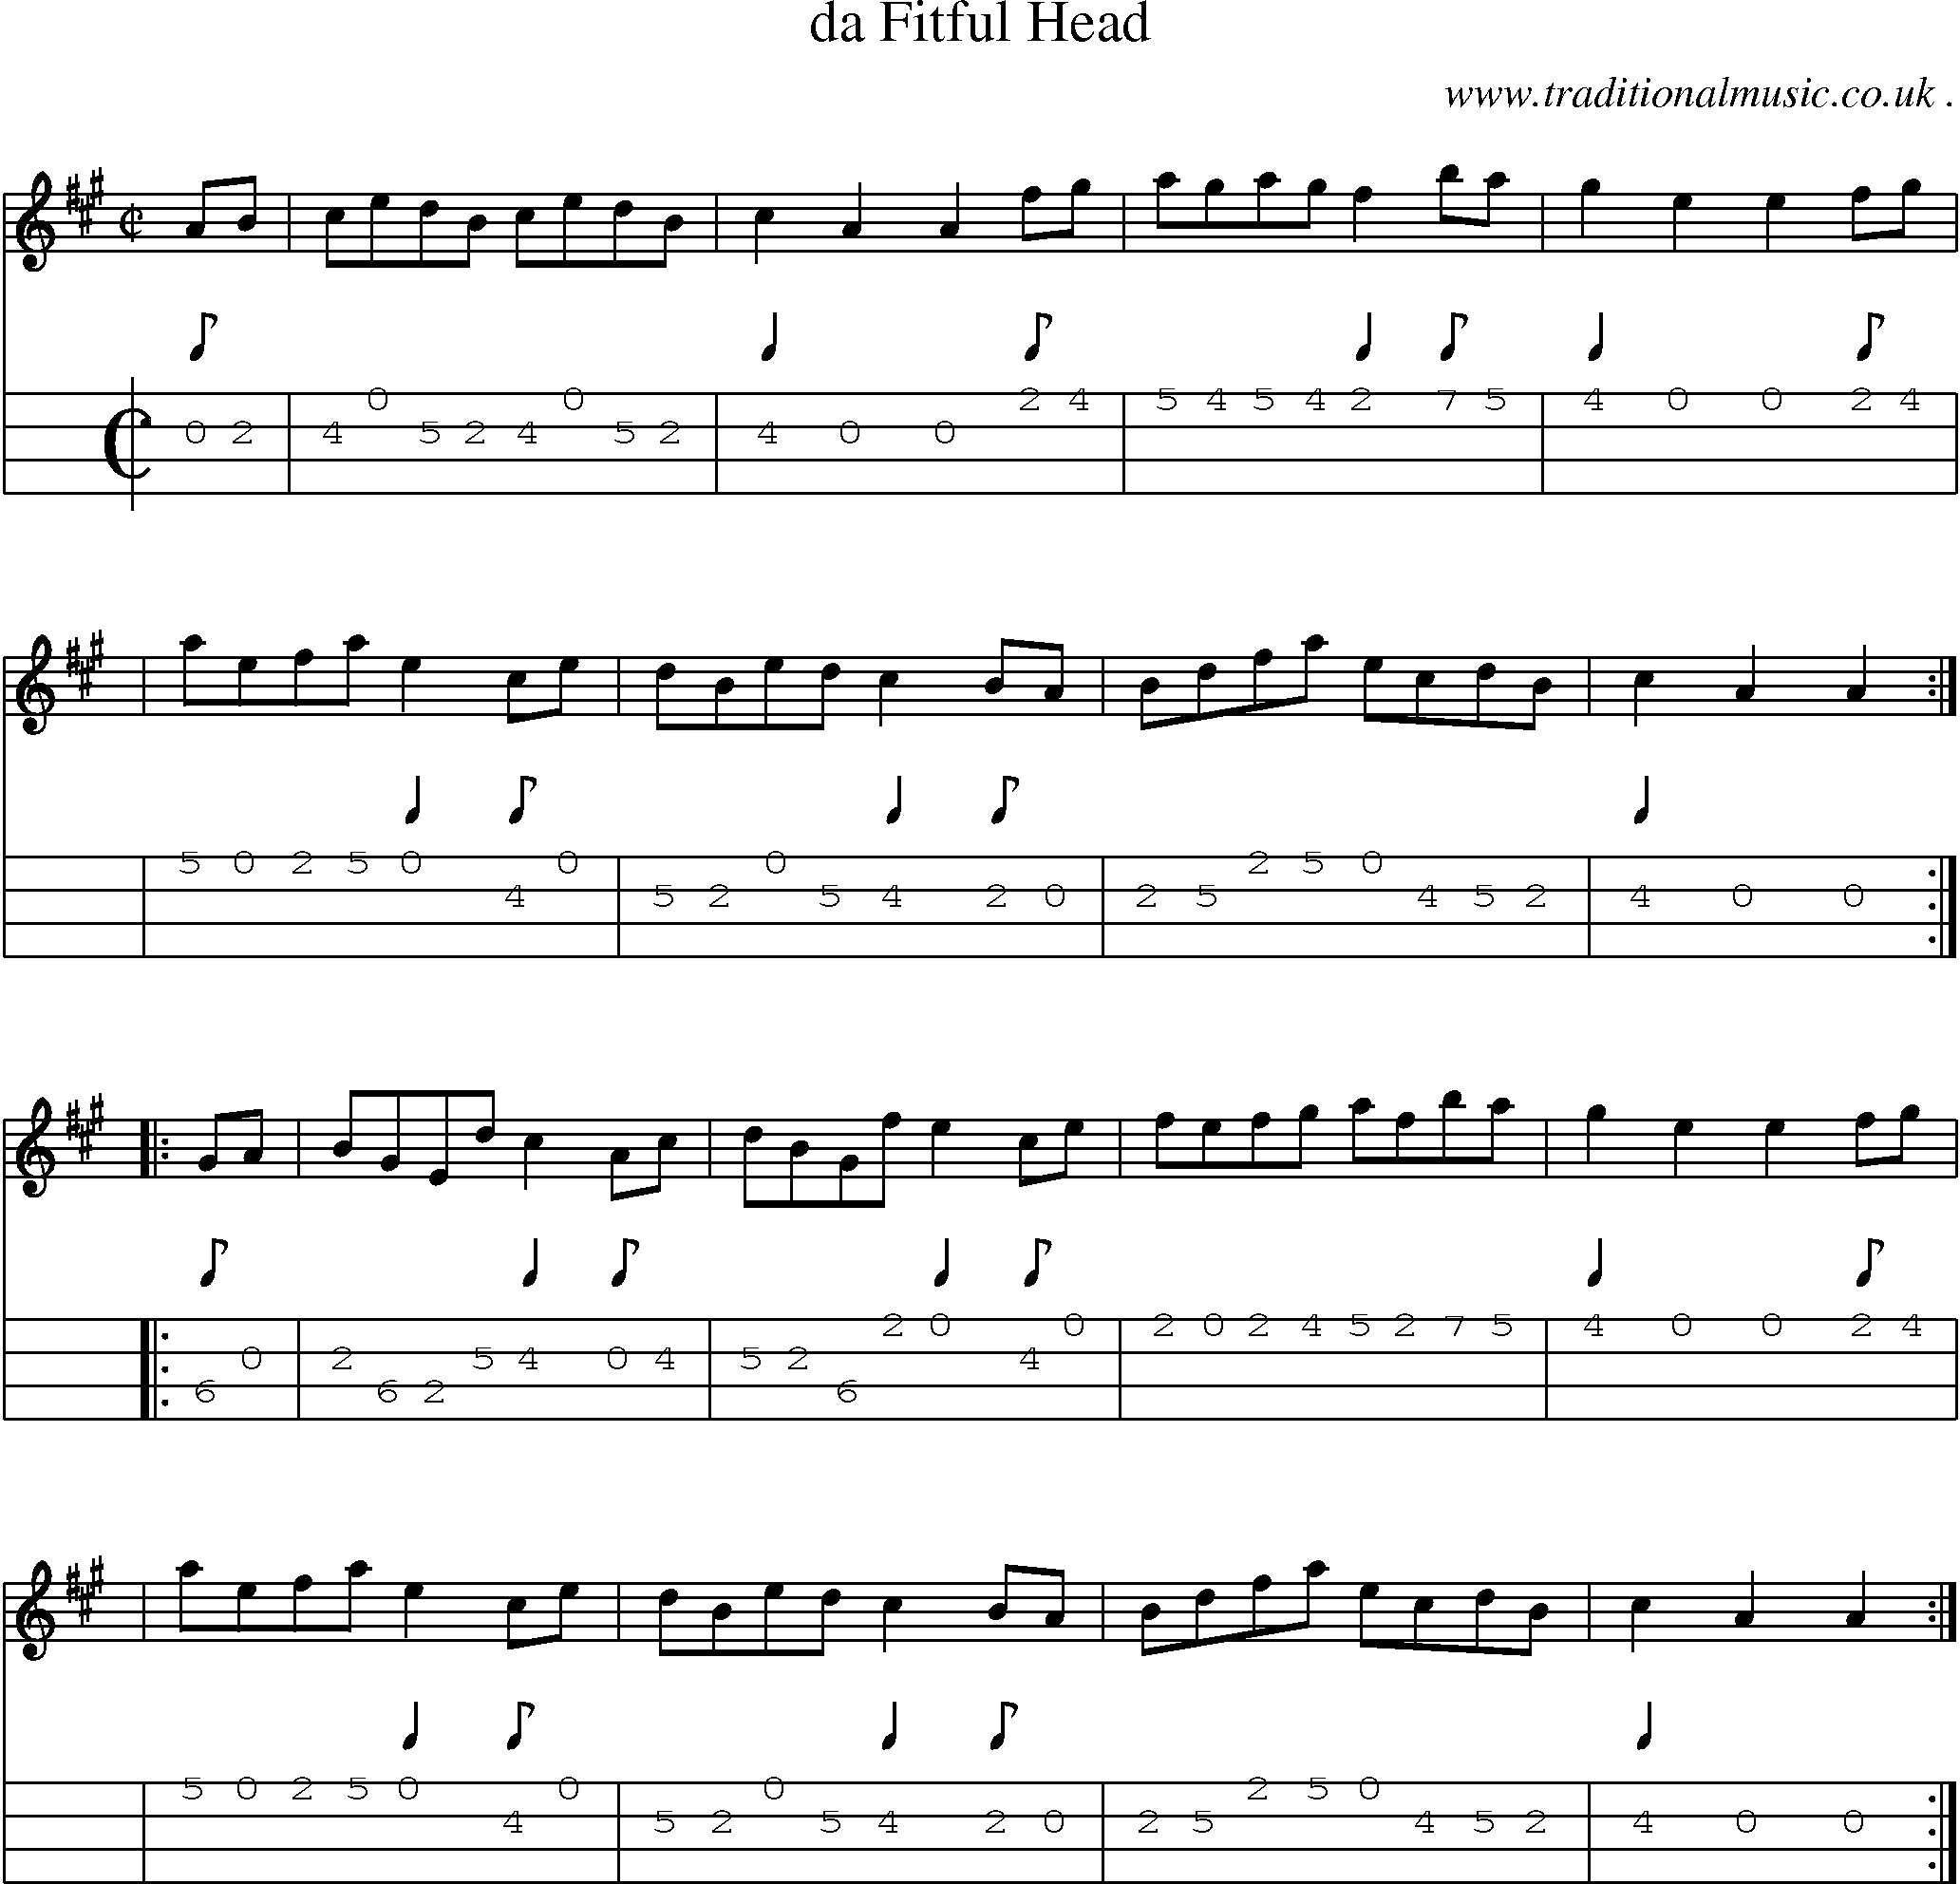 Sheet-music  score, Chords and Mandolin Tabs for Da Fitful Head